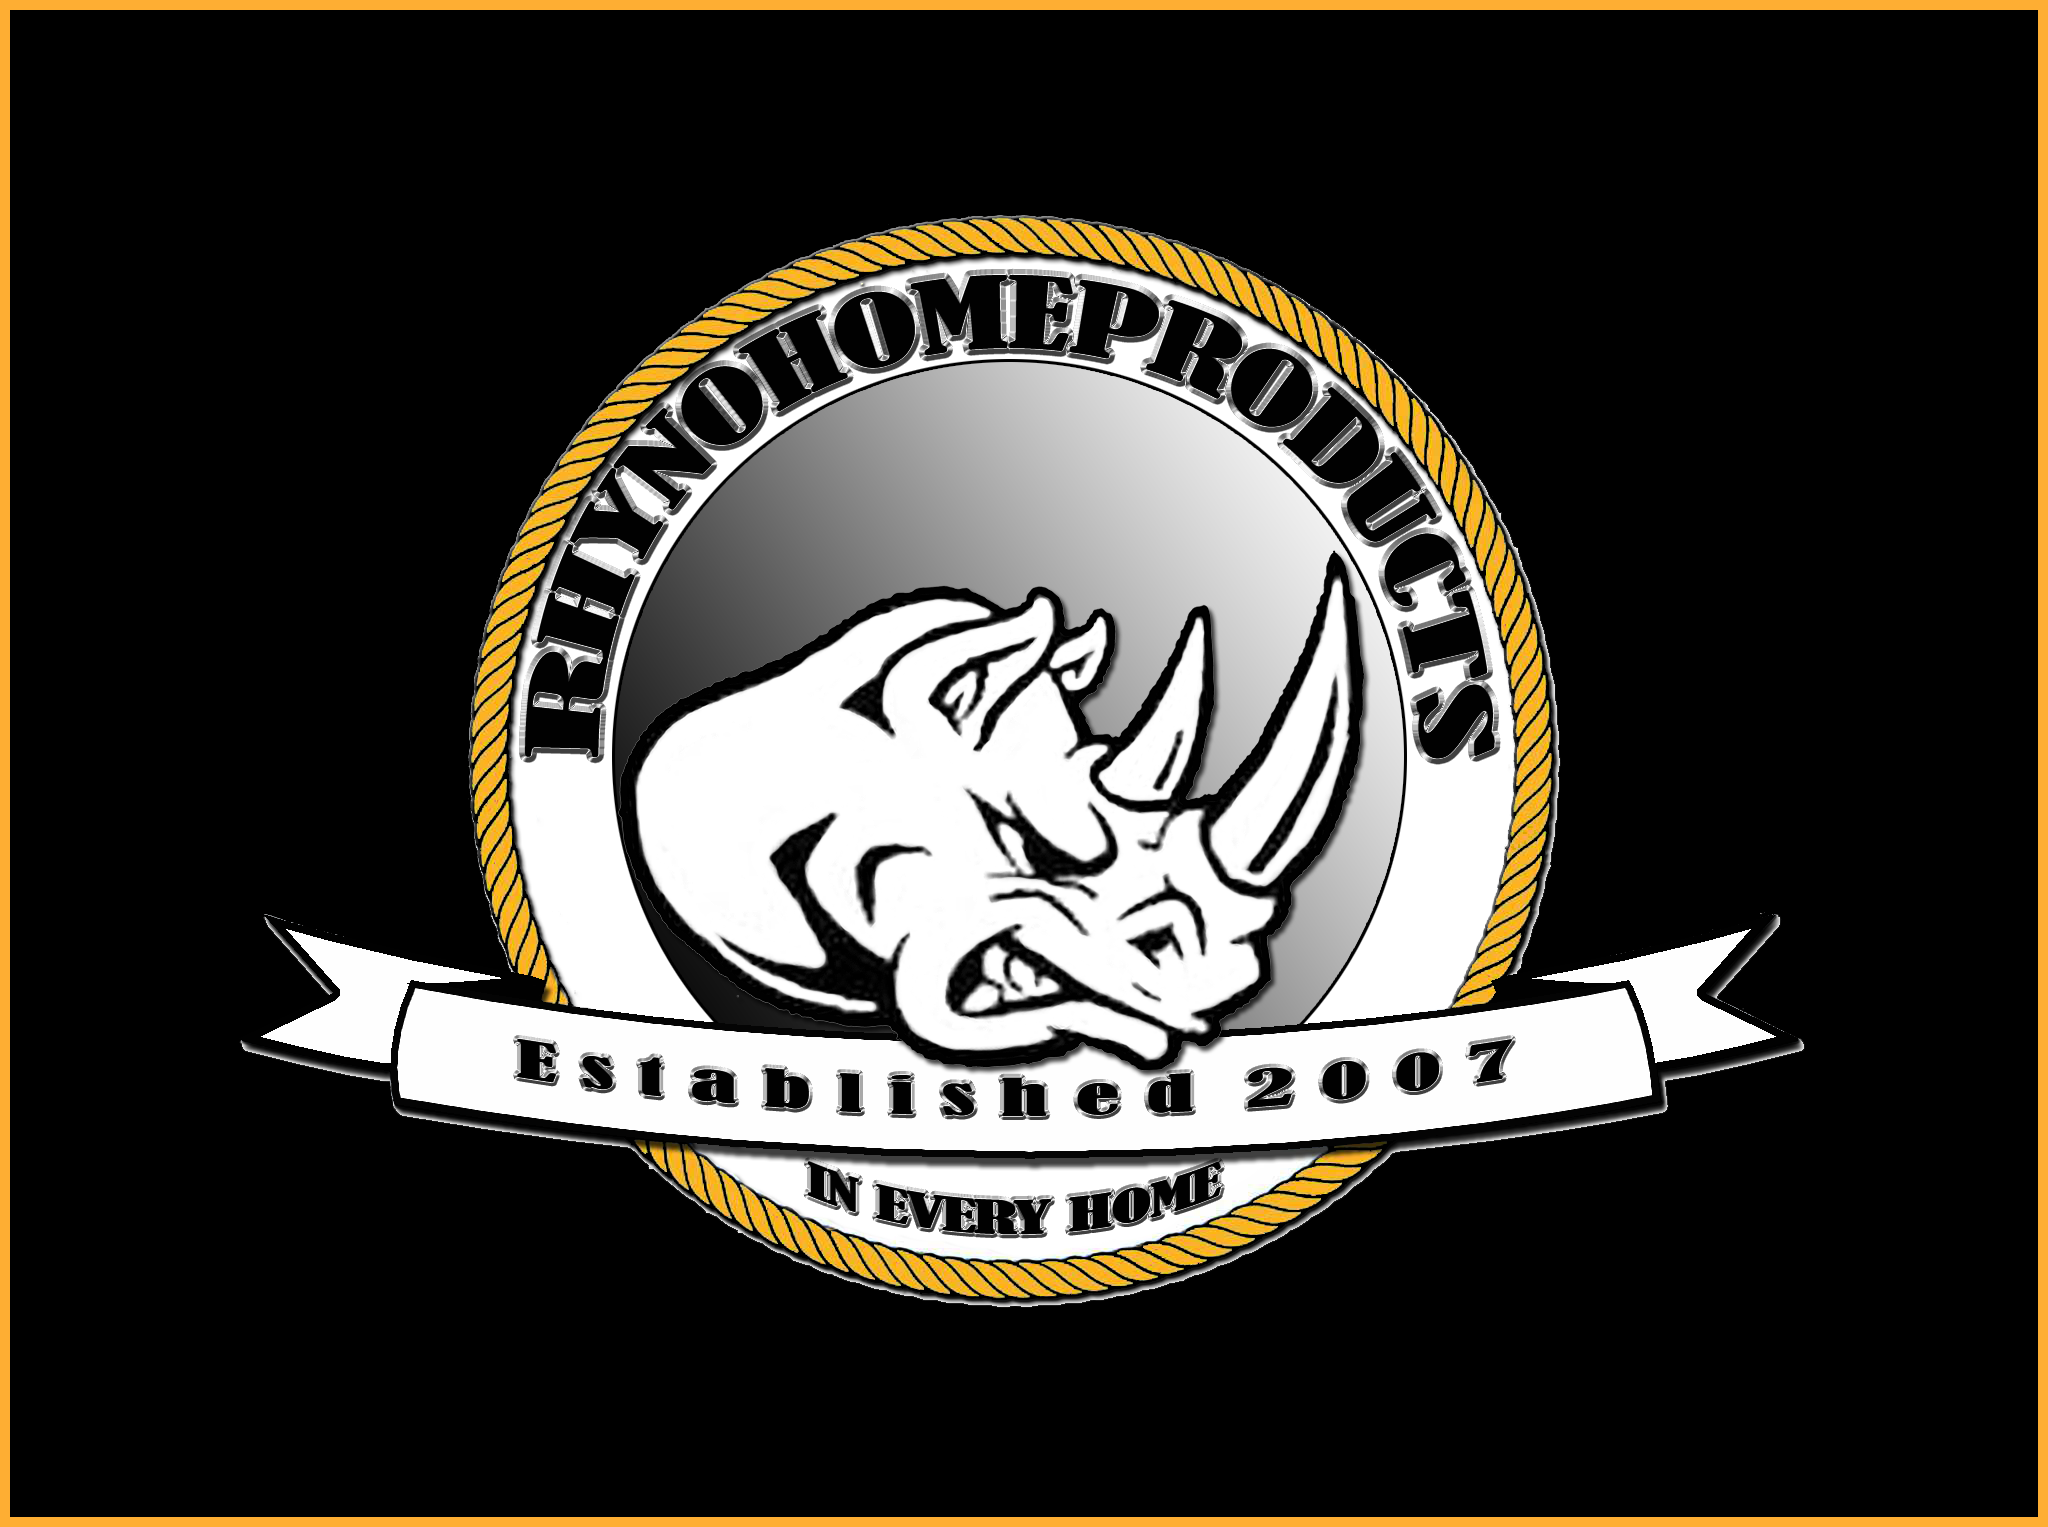 Rhyno Home Products logo